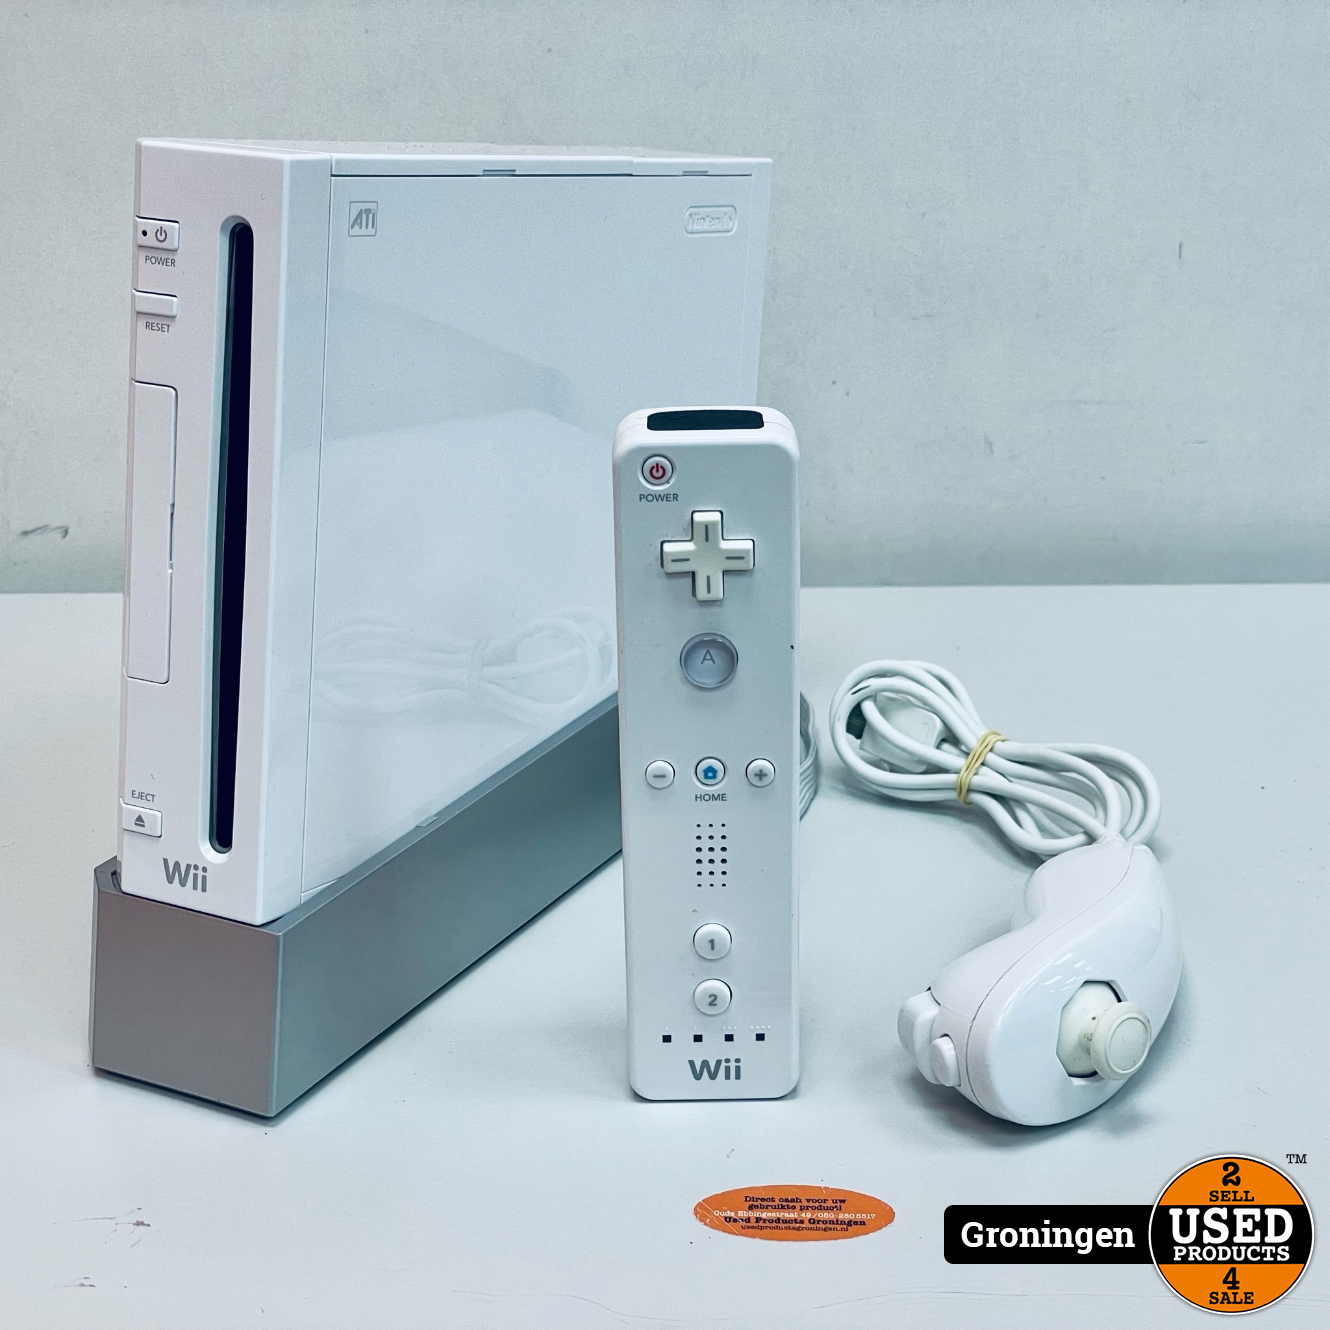 gras Standaard Verdraaiing Wii] Nintendo Wii Console Wit | incl. Remote Controller + NunChuck Wit en  kabels - Used Products Groningen